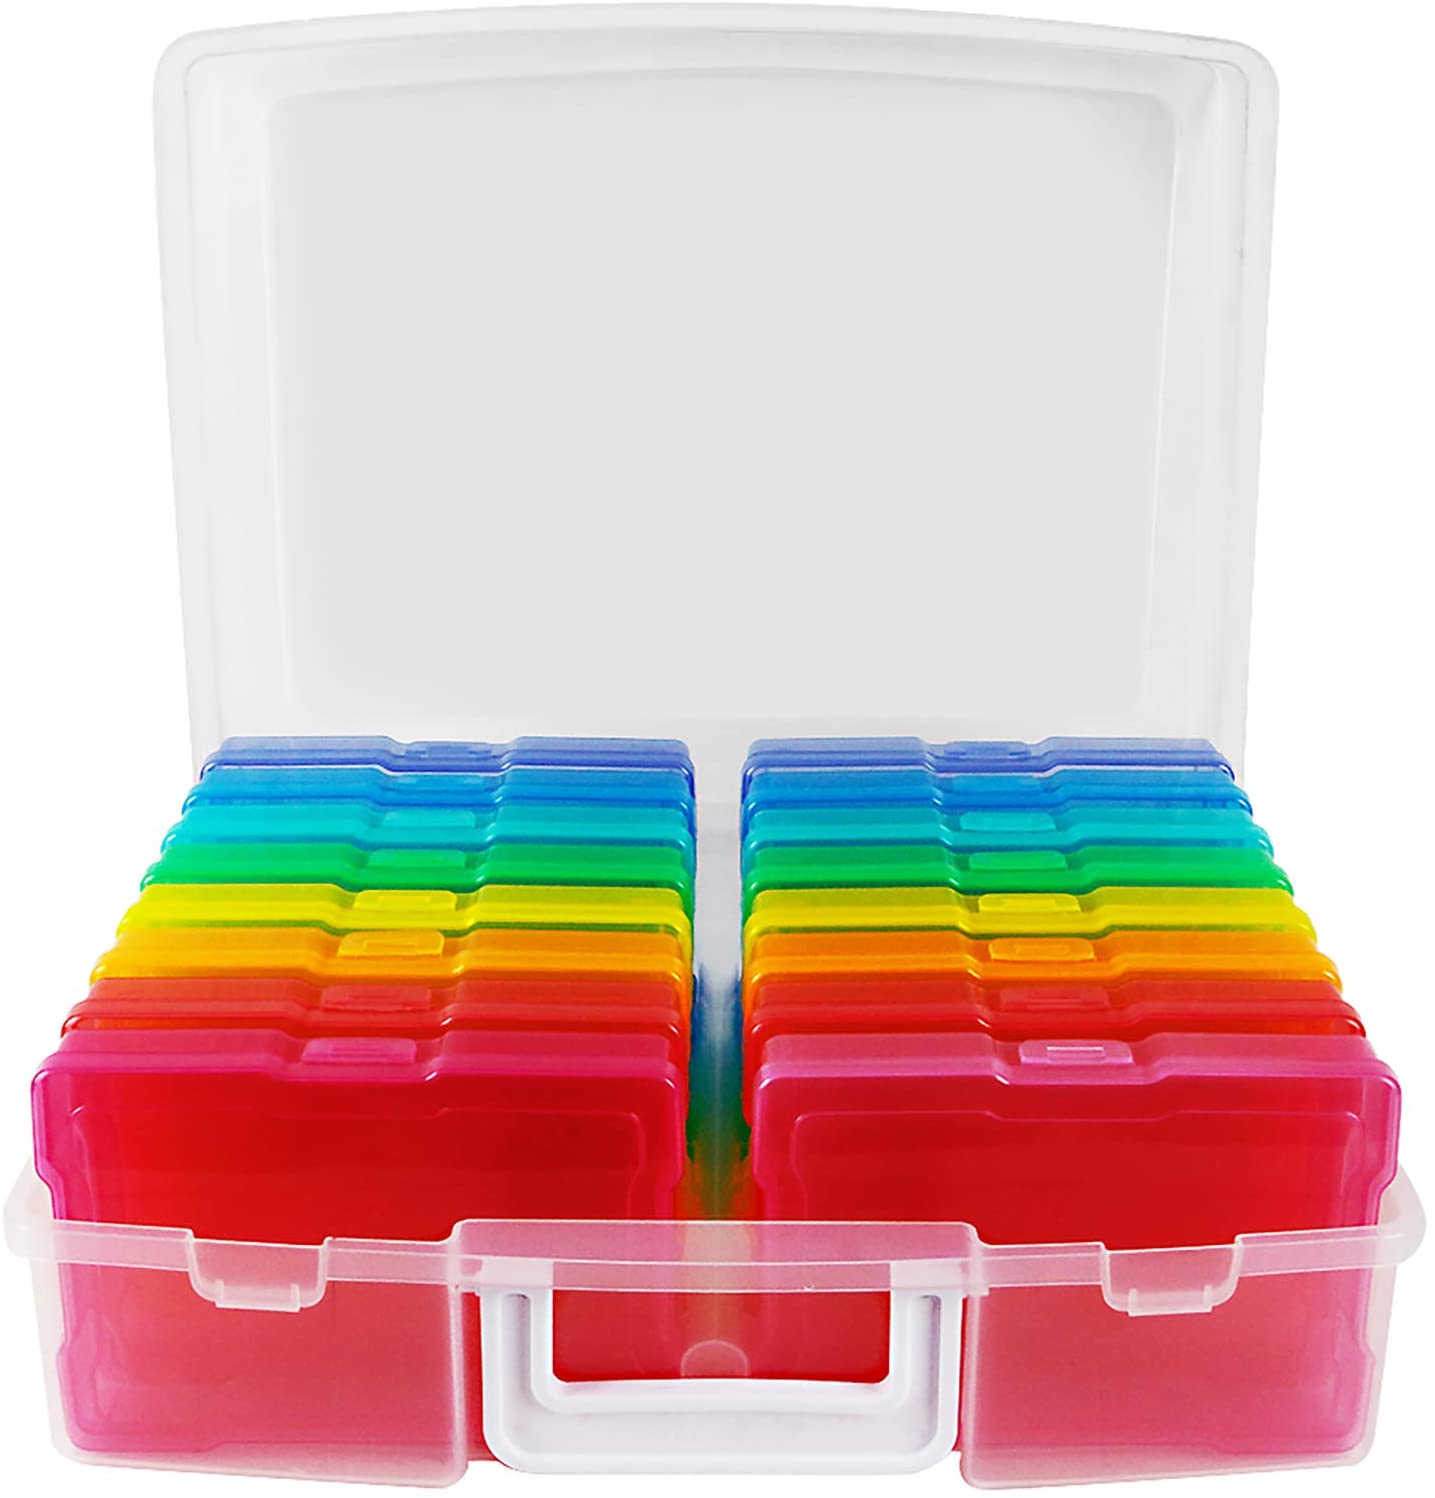 novelinks Snap-Tight Portable Photo Storage Organizer Box